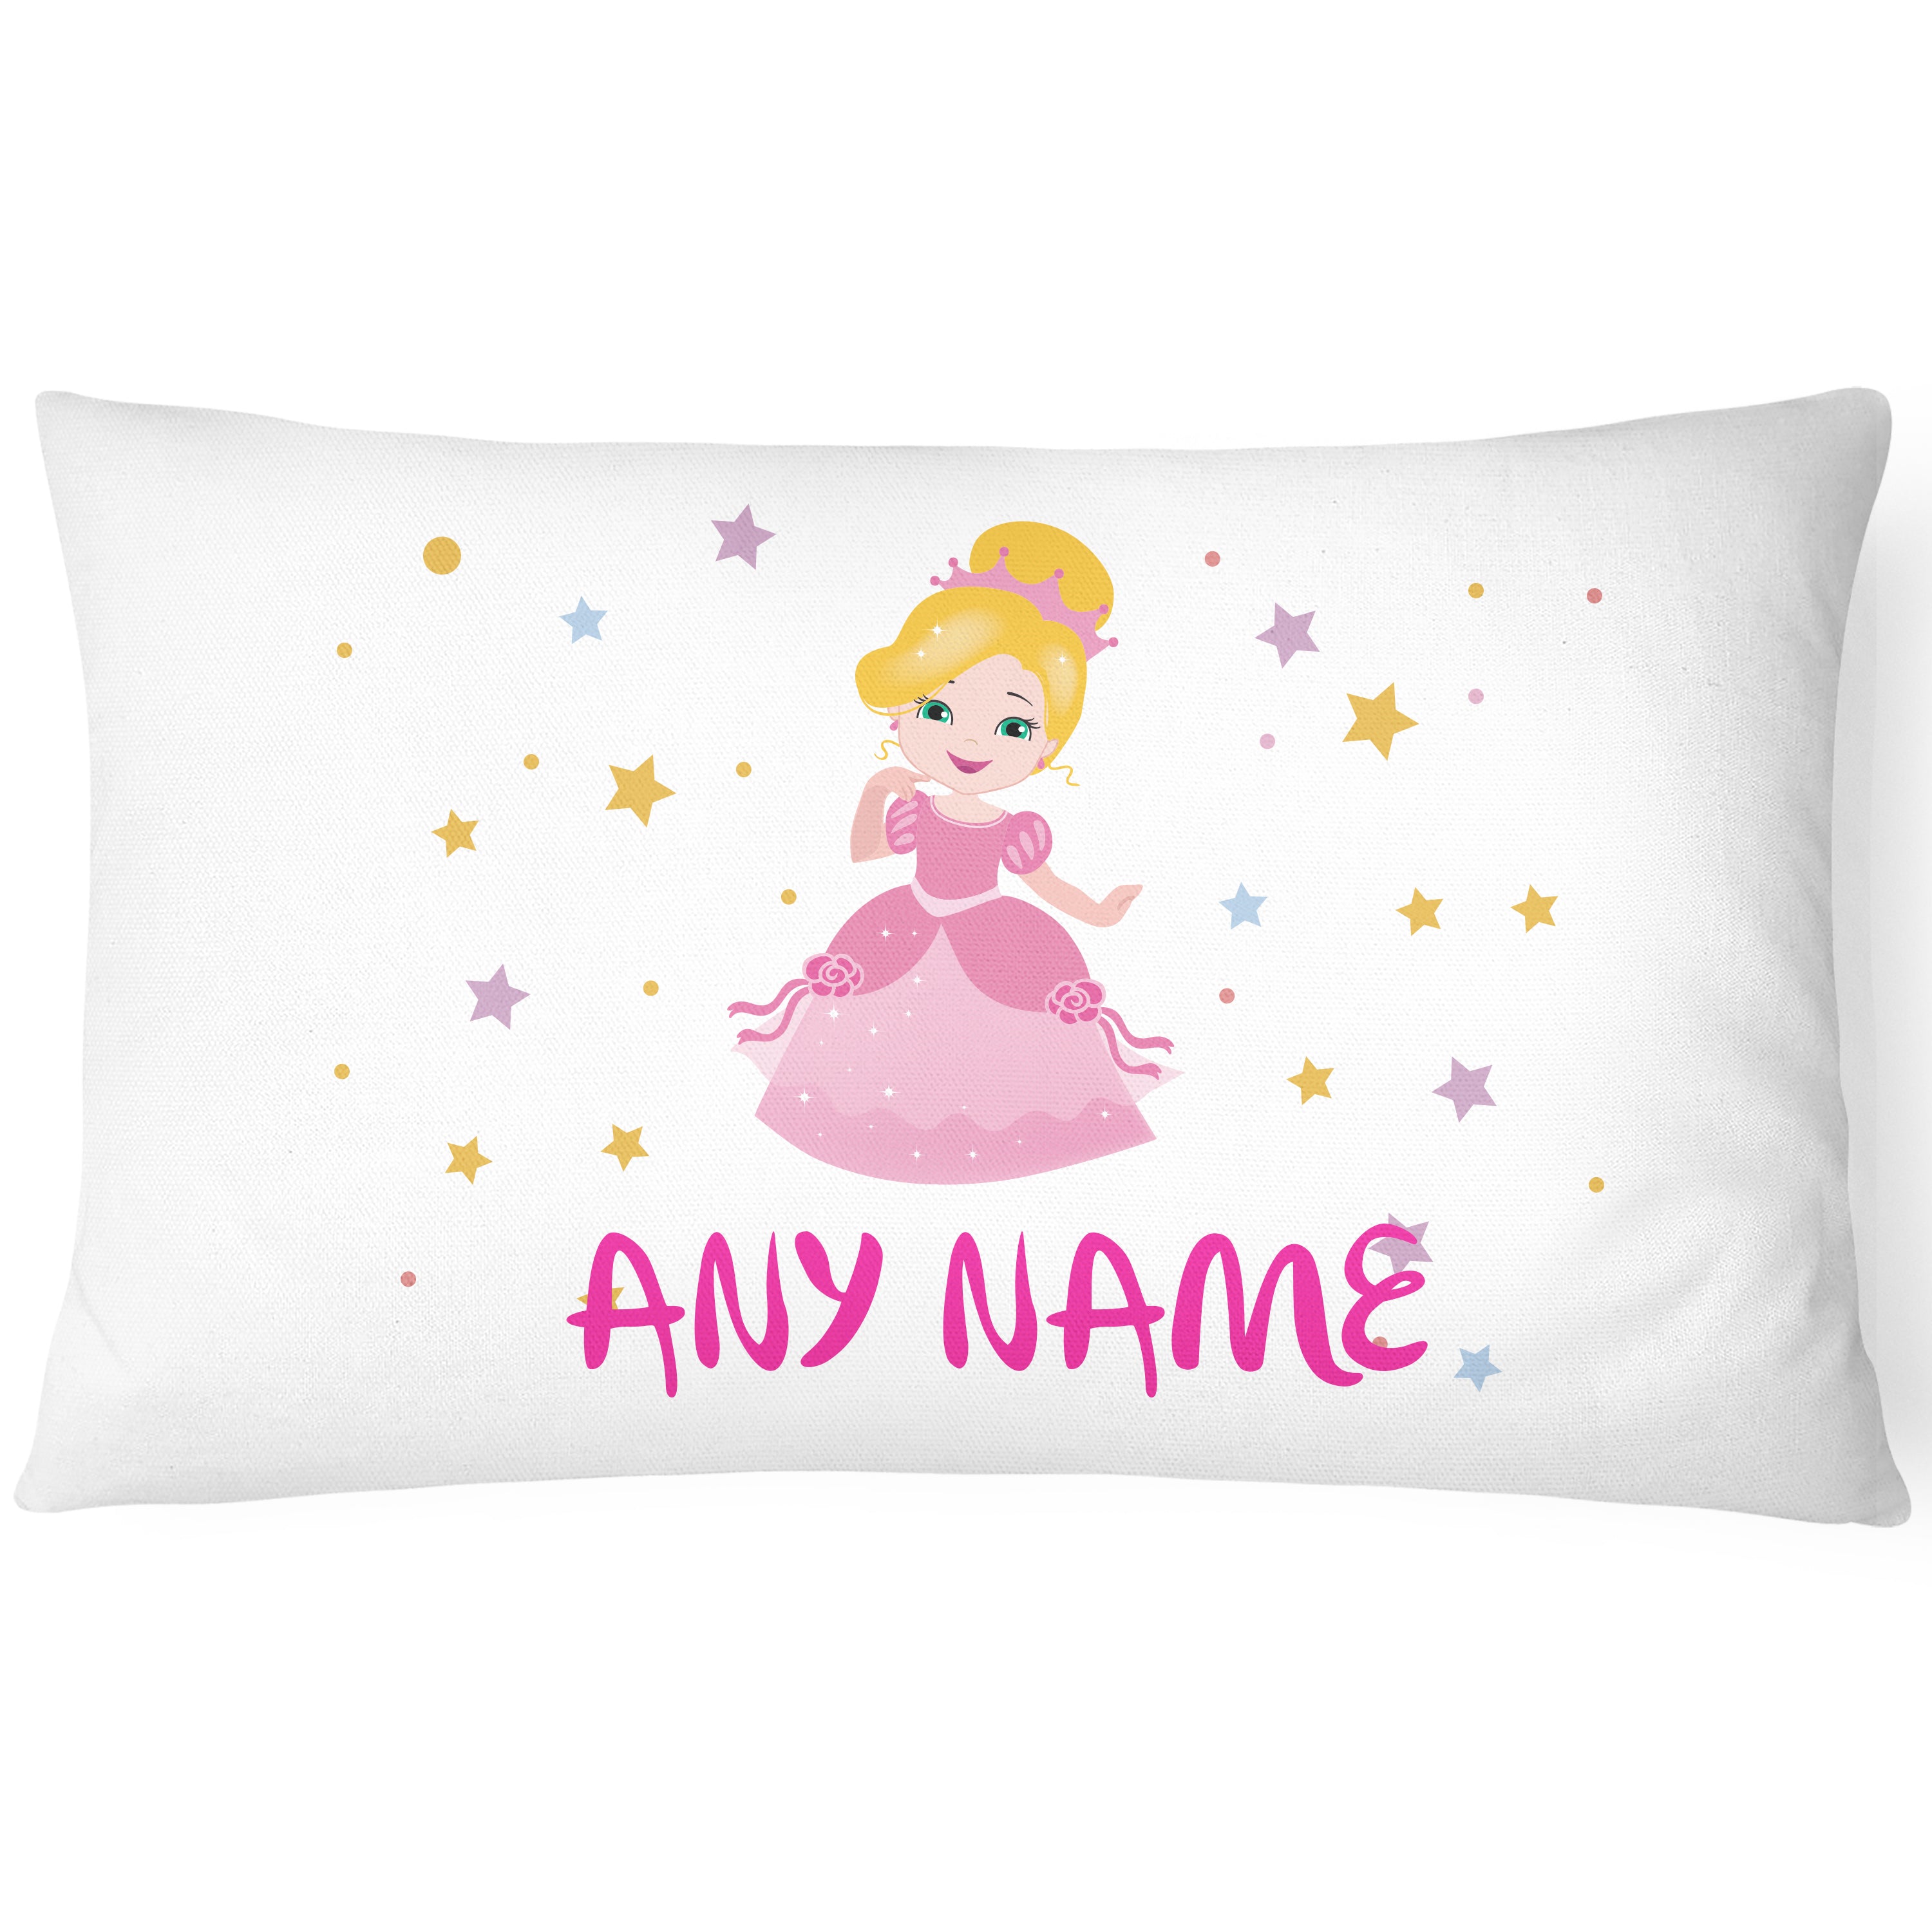 Personalised Princess Pillowcase - Pretty Pink